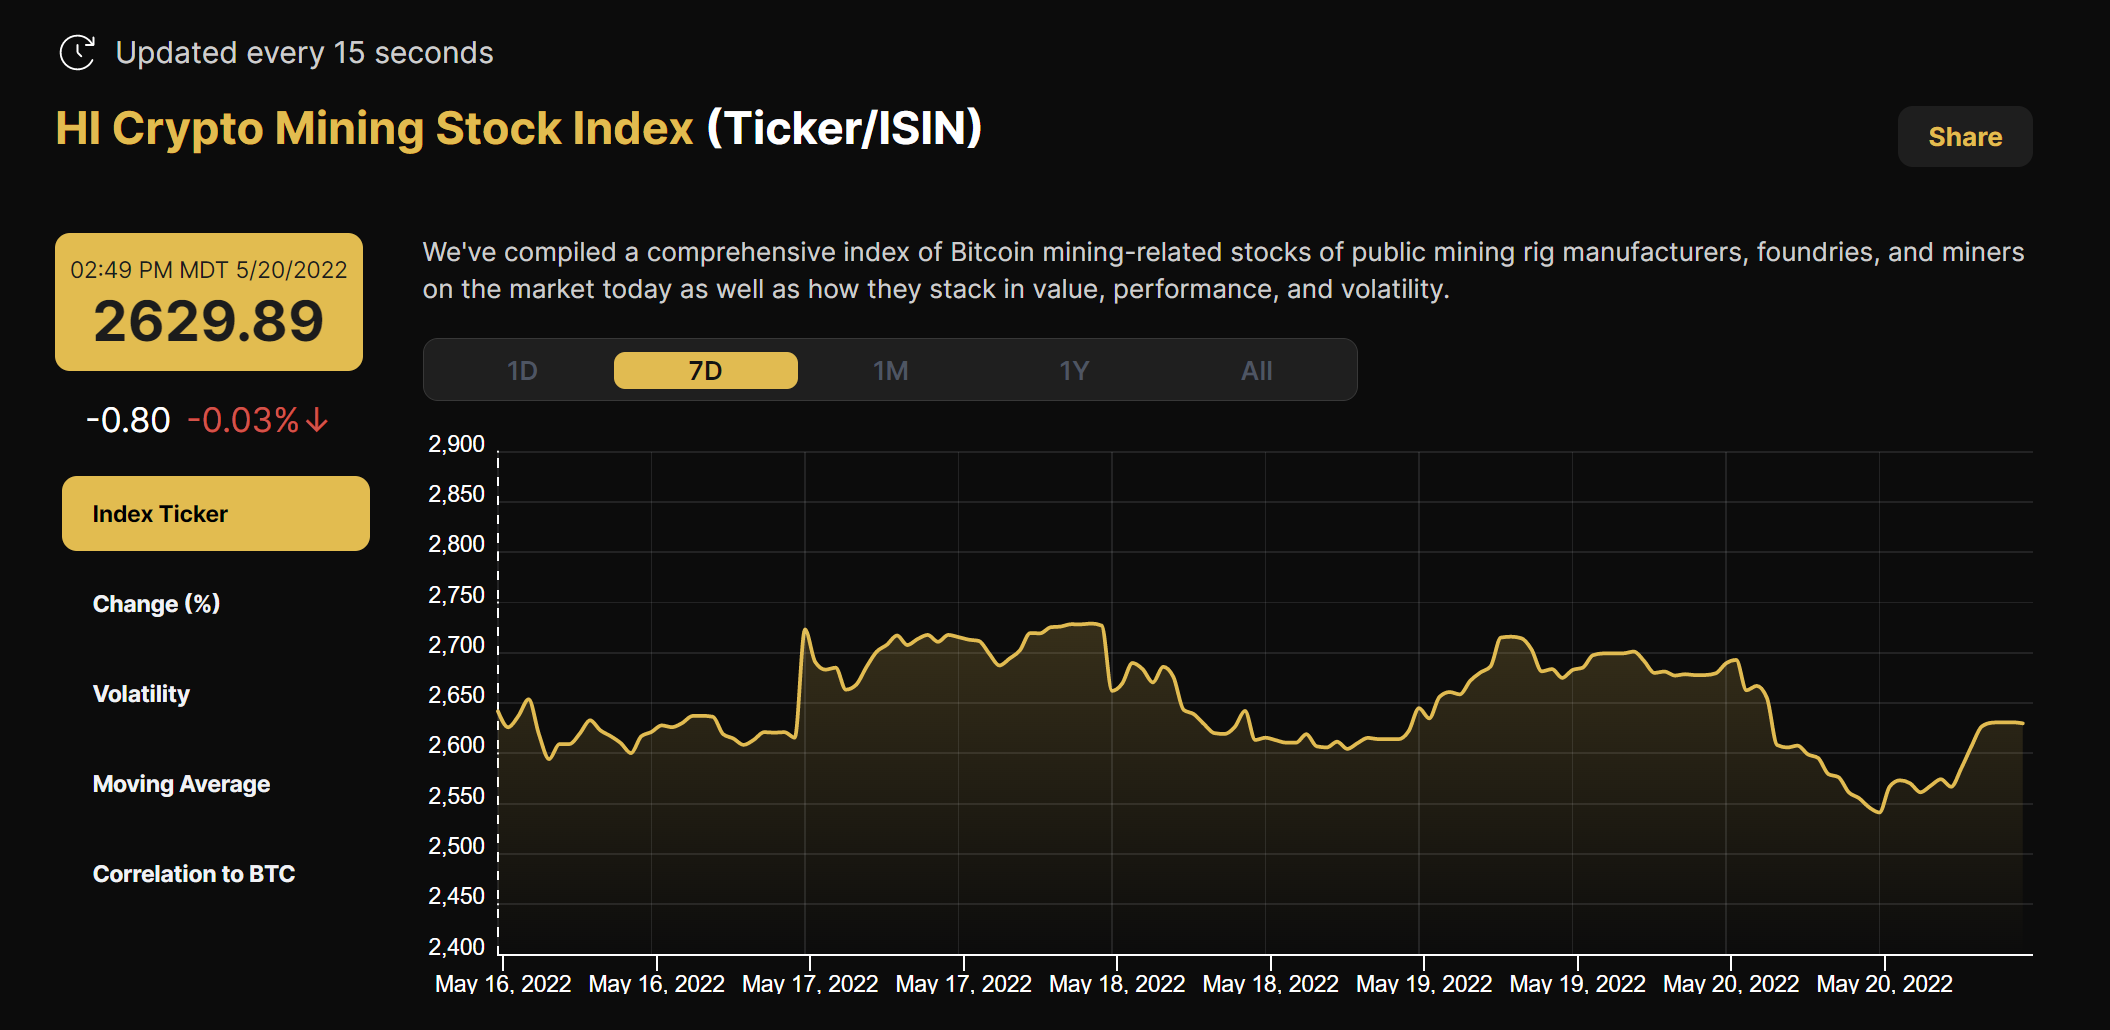 Hashrate Index Crypto Mining Stock Index (May 15 - May 20, 2022)